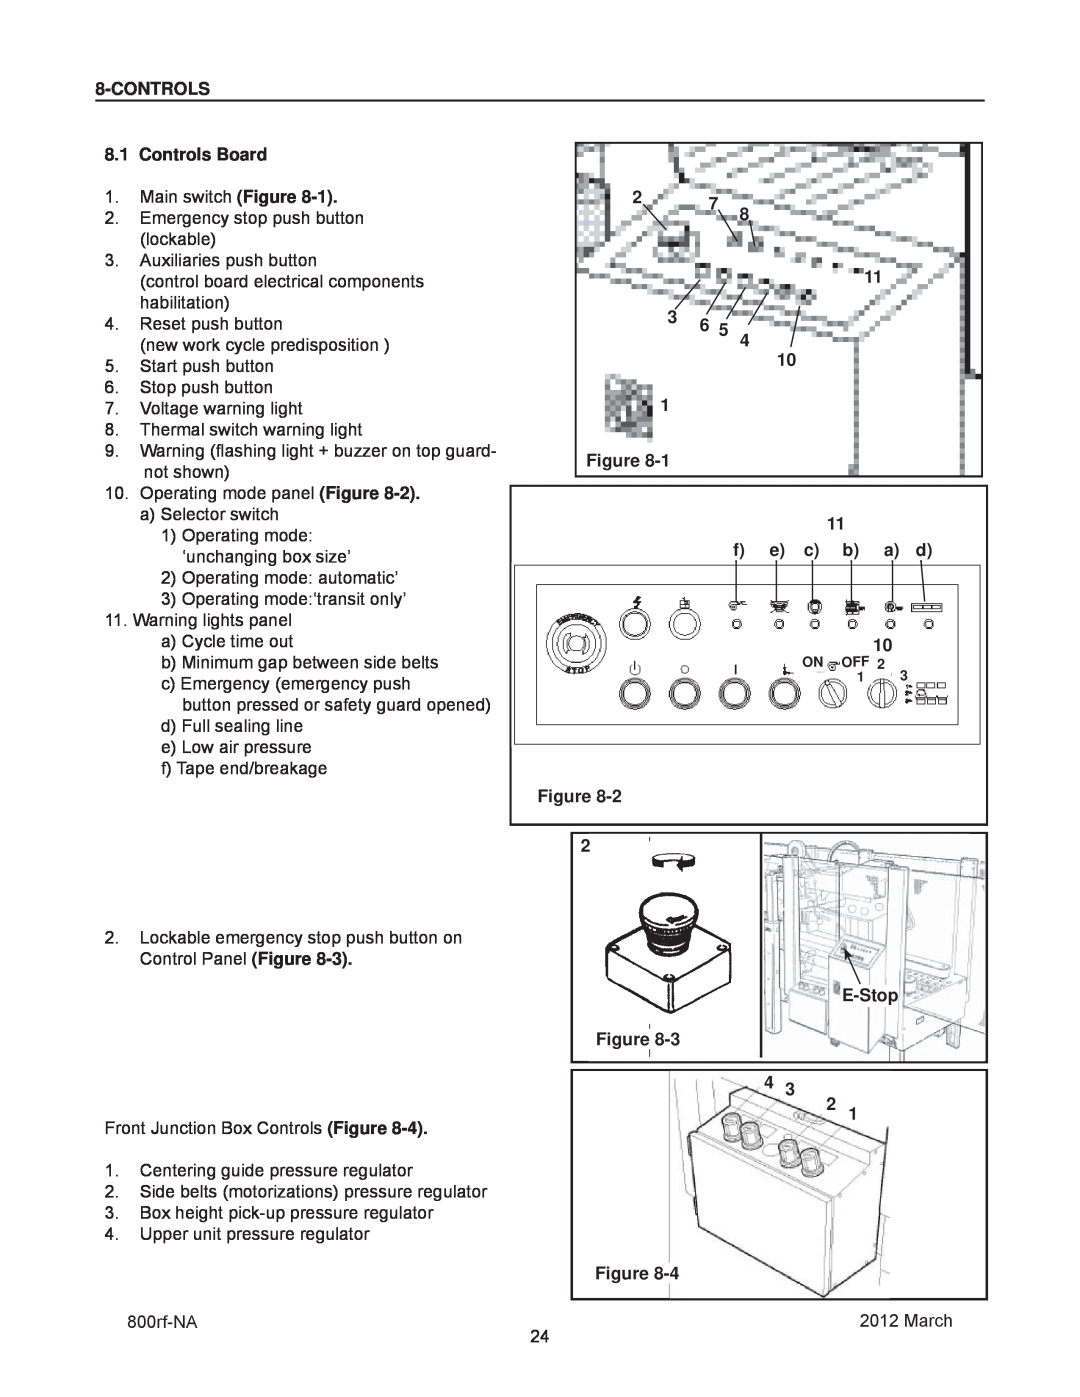 3M 40800, 800rf manual Controls Board 1. Main switch Figure, 3 6 5, f e c b a d, E-Stop 